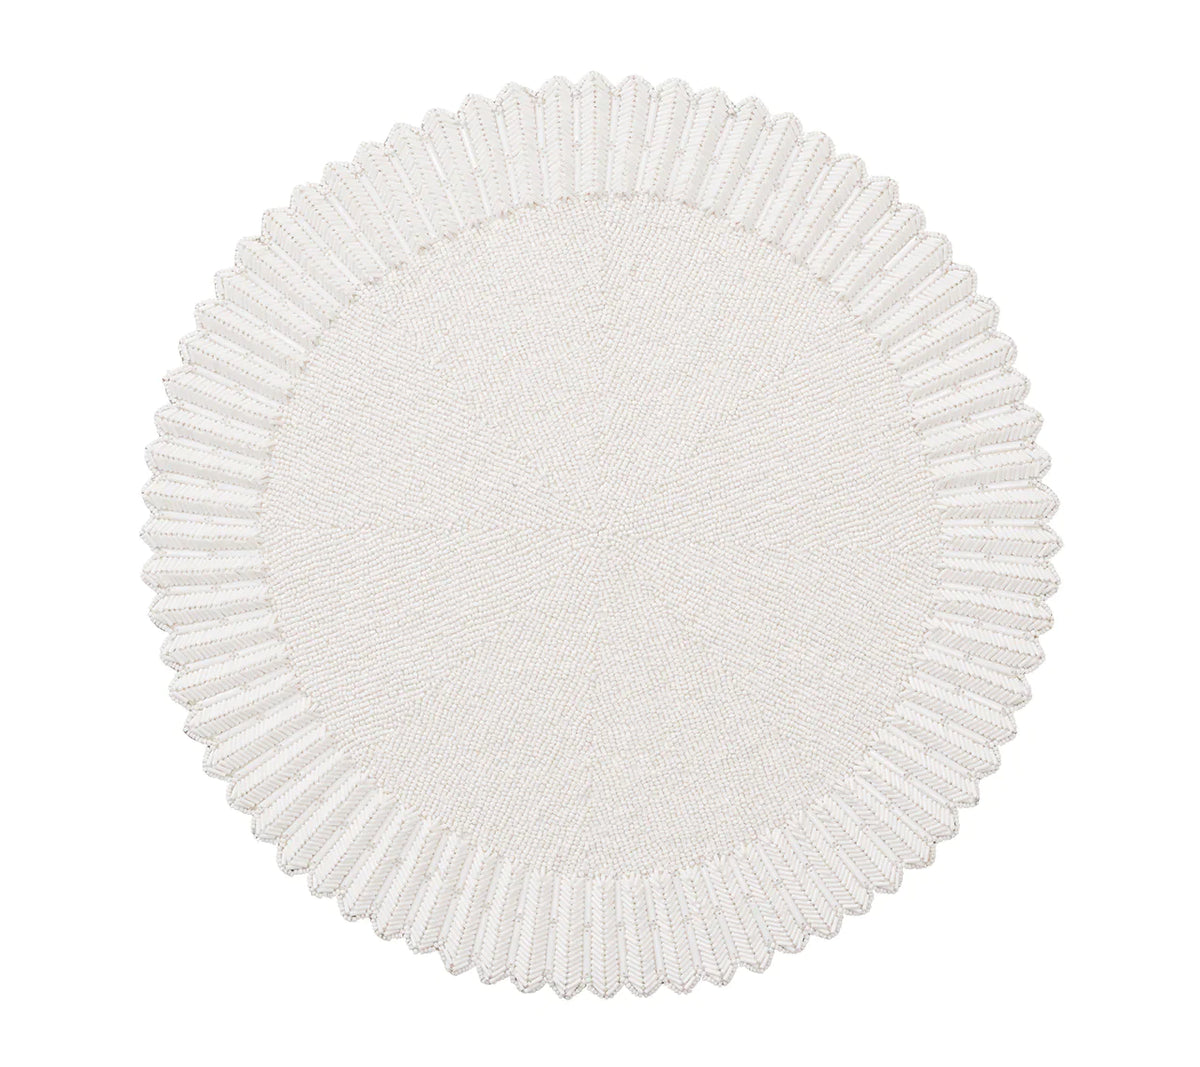 Lumina Placemat in White, Set of 2